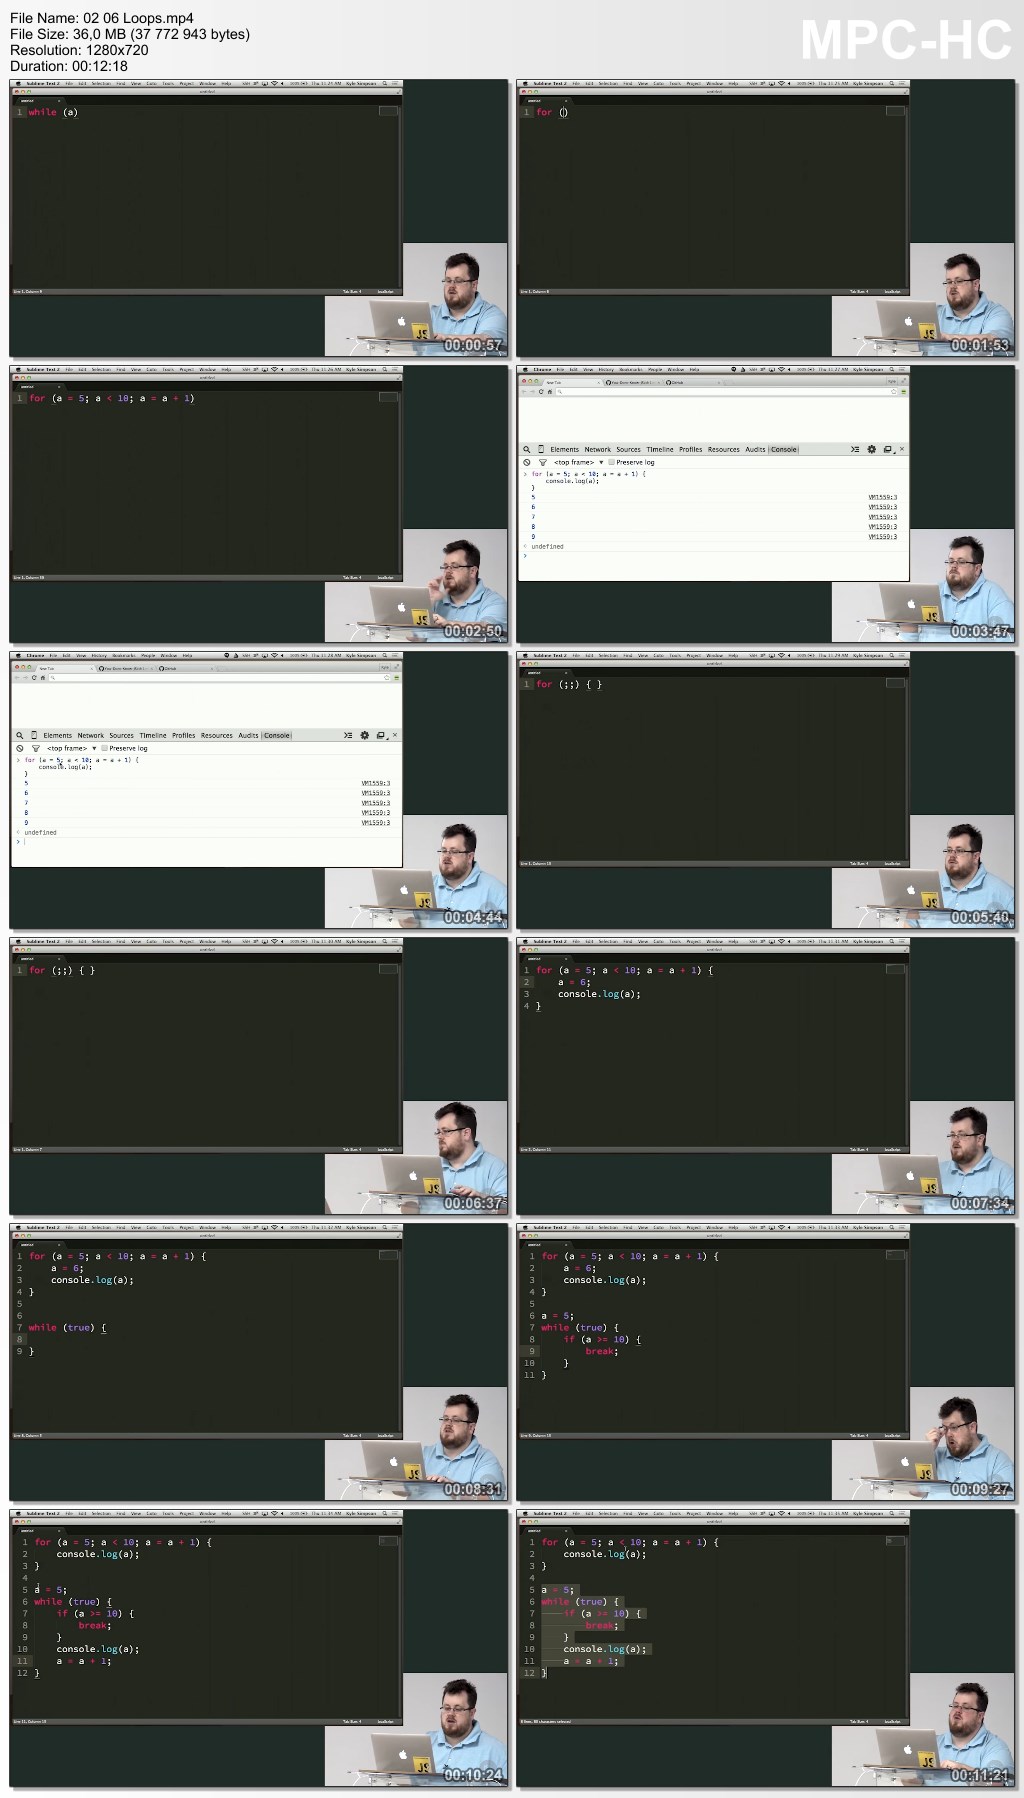  Basics of Programming with JavaScript